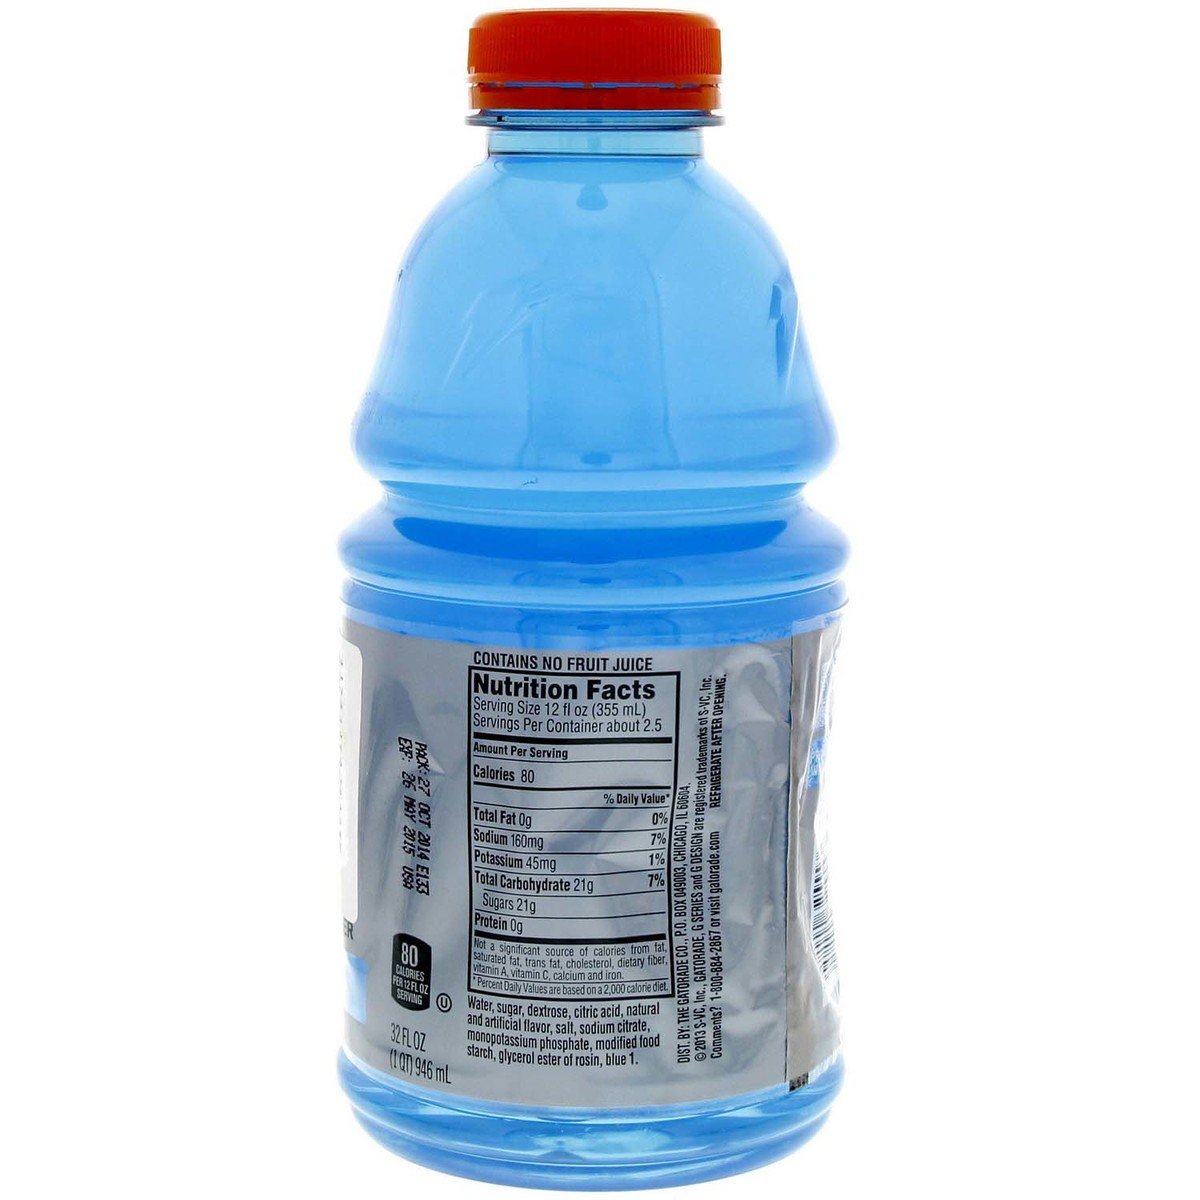 Gatorade Cool Blue Sports Drink 946ml